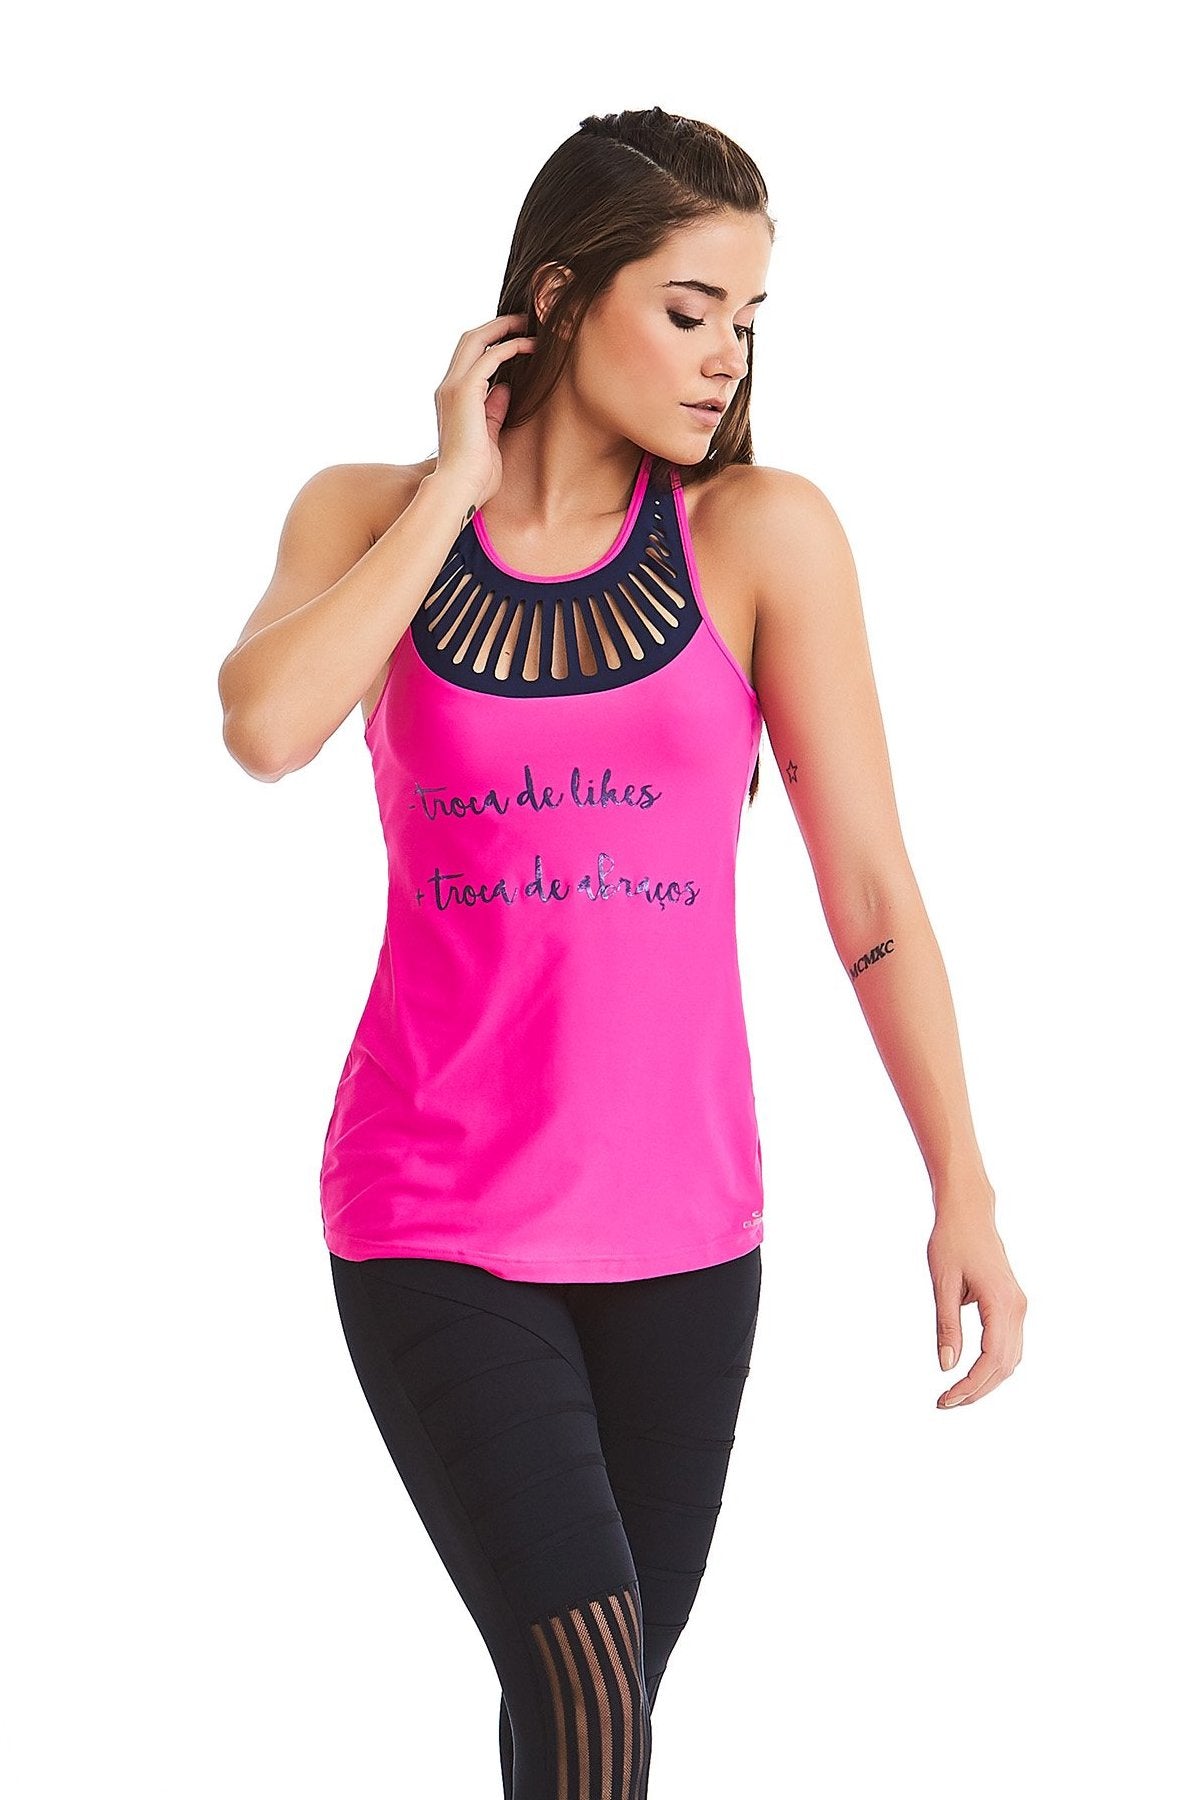 CajuBrasil USA Brazilian Fashion Fitness Top Laser LIKES - Pink - UV Protection!